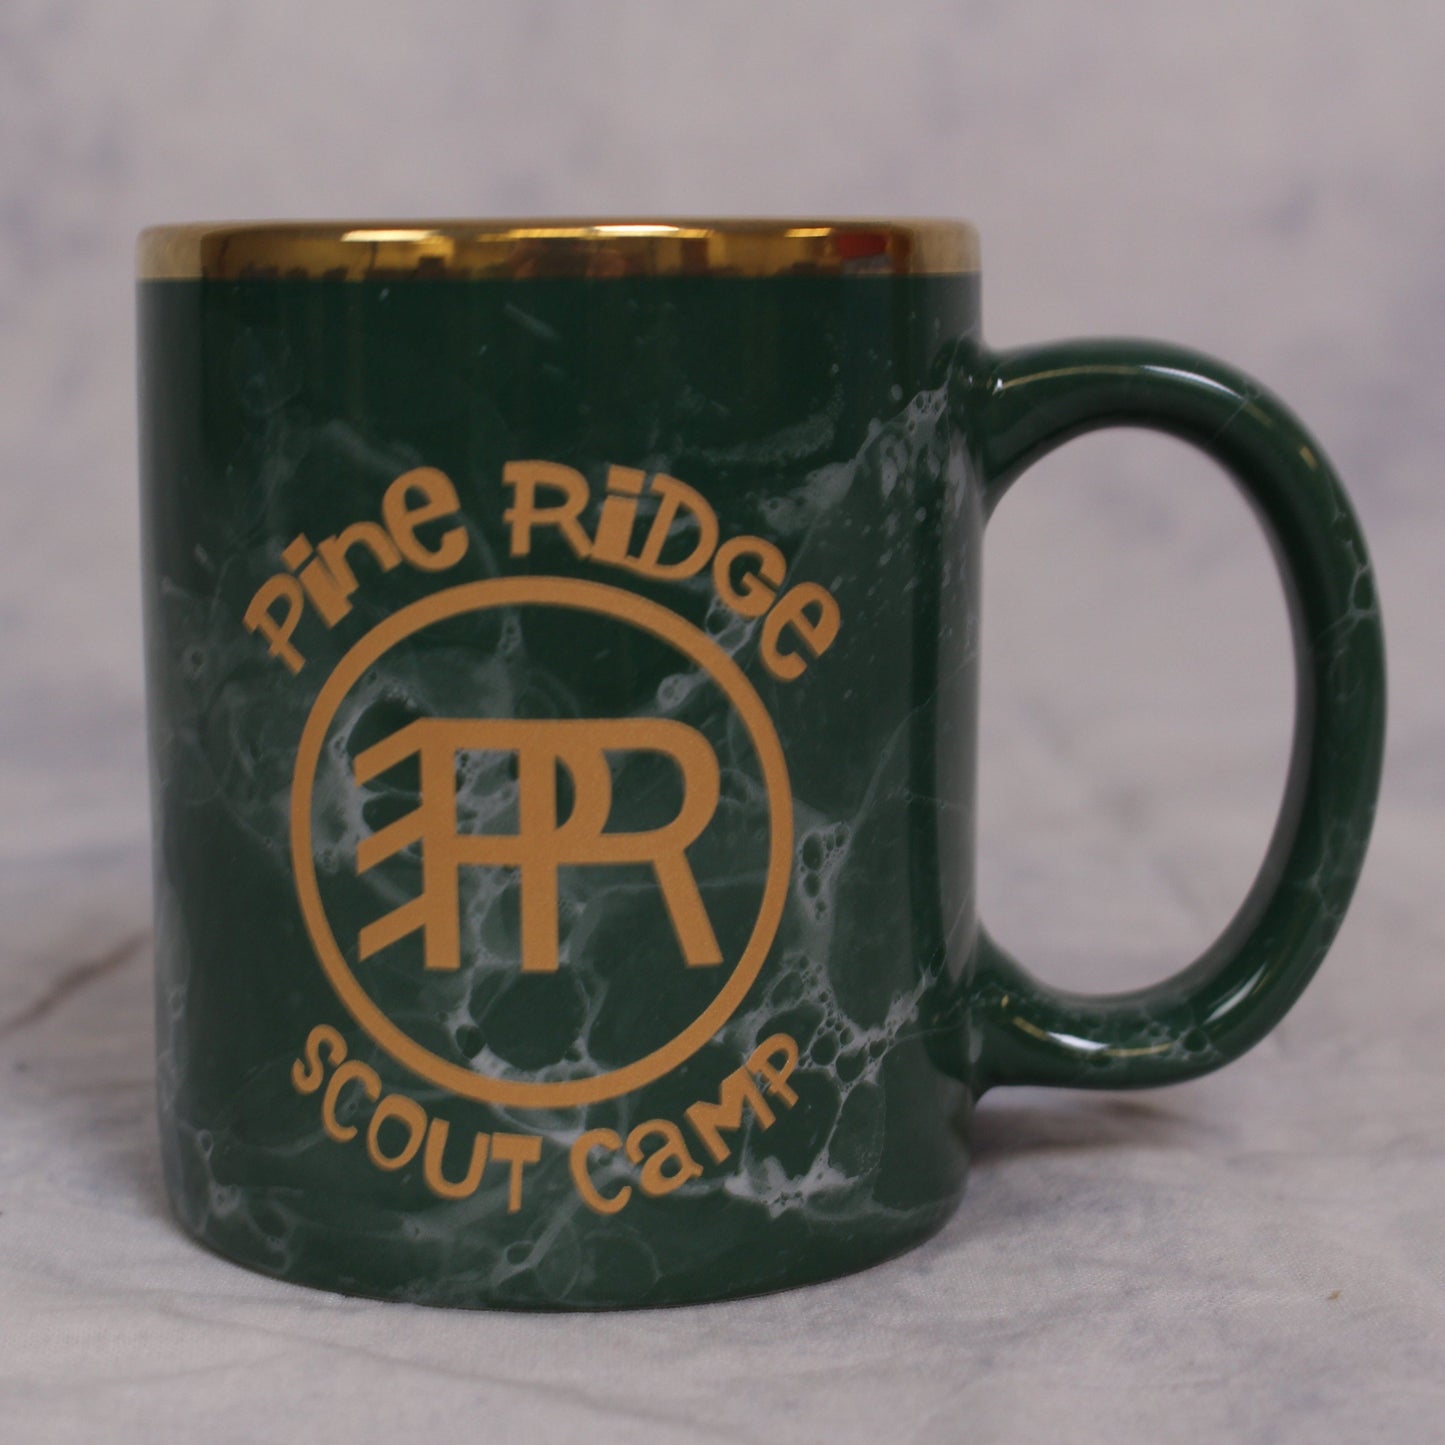 Mug "Pine Ridge Green Coffee Mug"